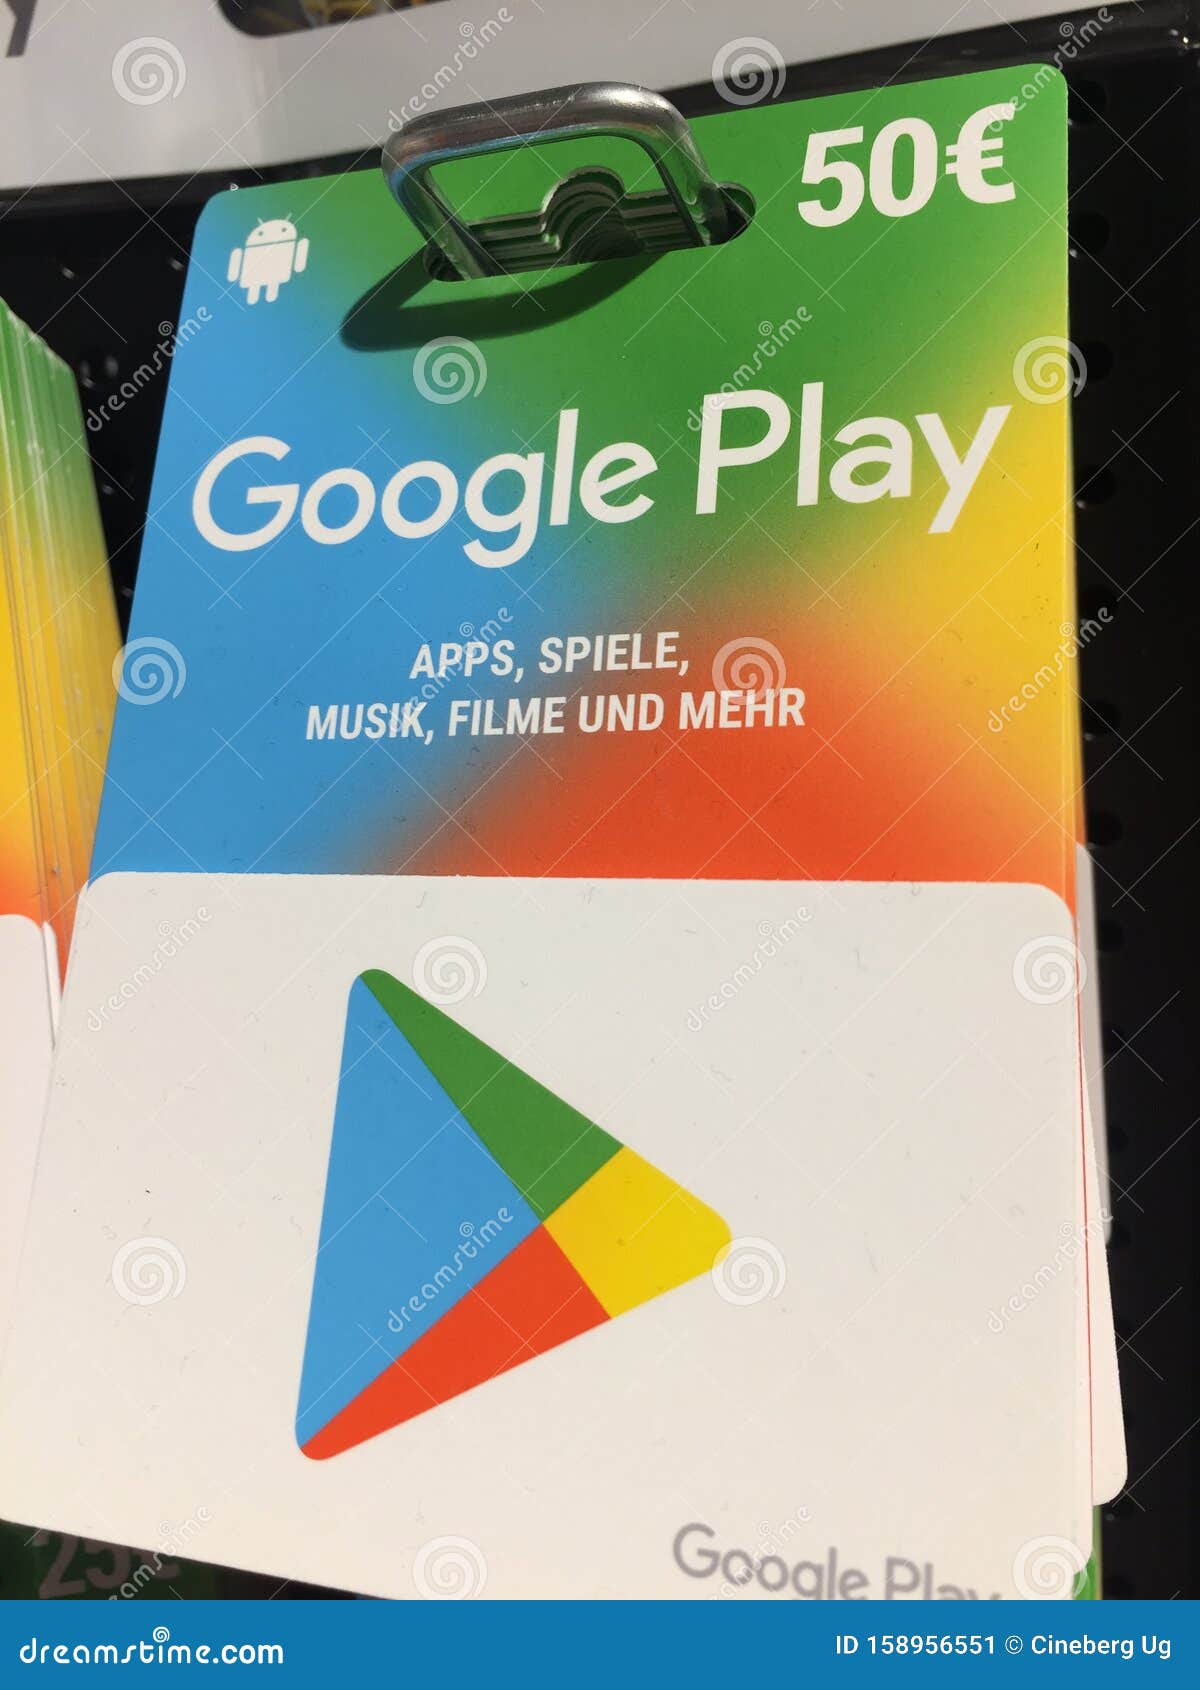 Carte regalo Google Play: guida all'uso